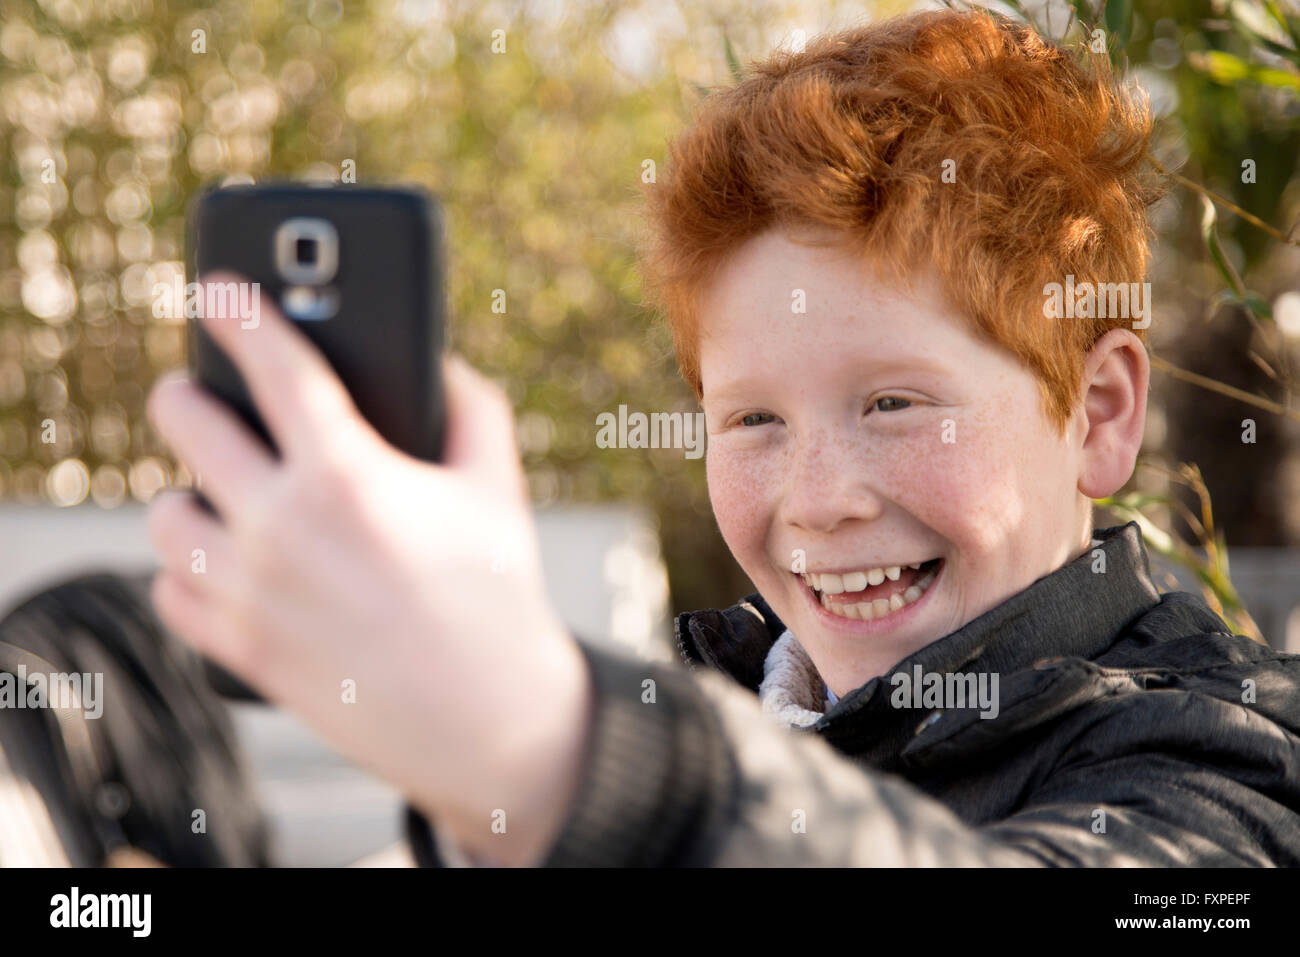 Boy using smartphone to take a selfie Stock Photo